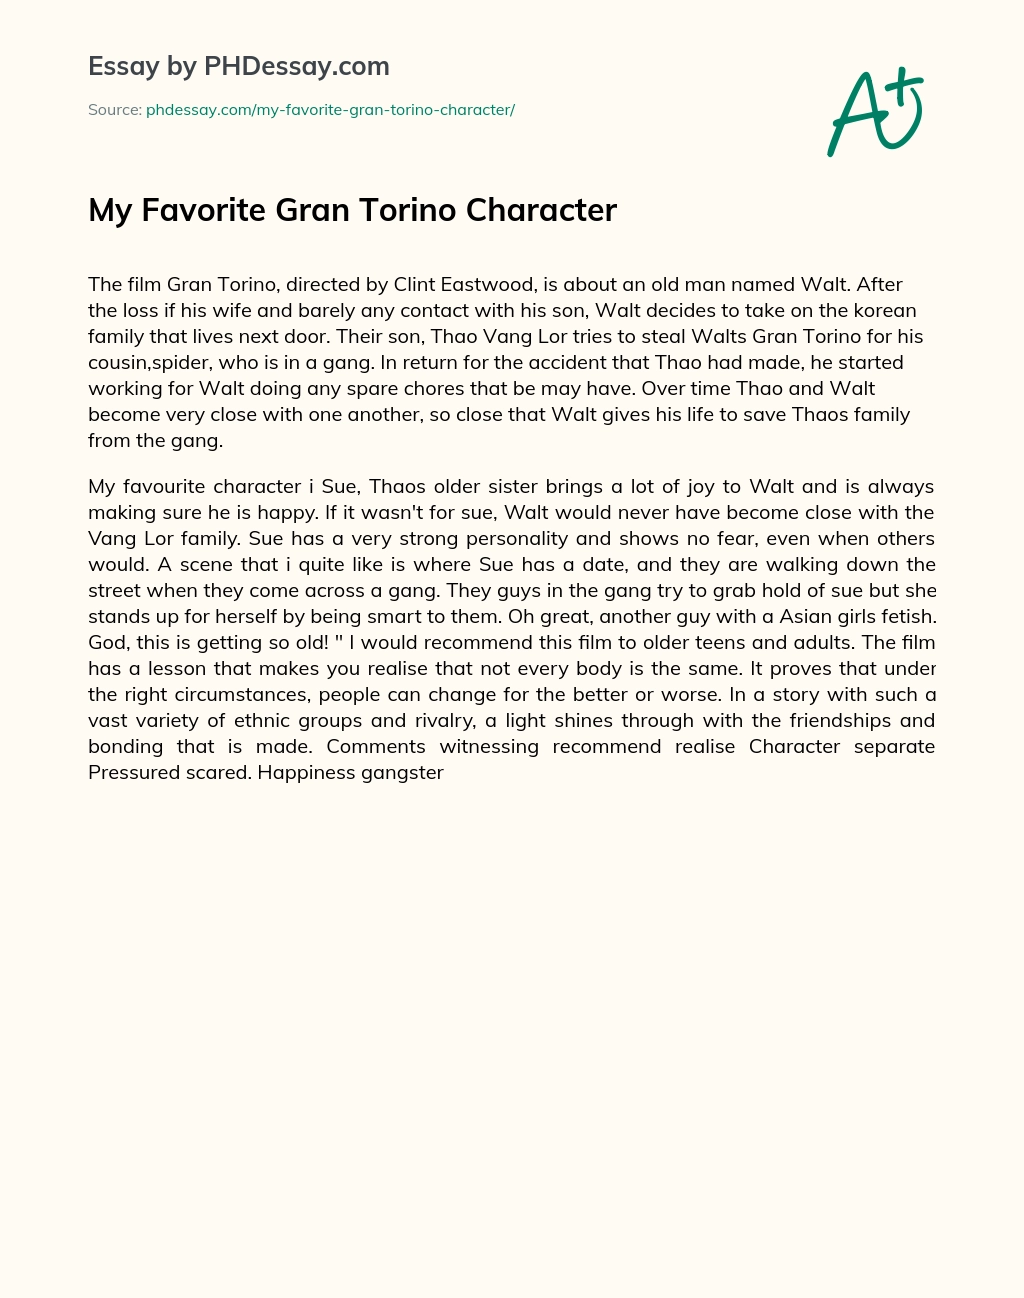 My Favorite Gran Torino Character essay